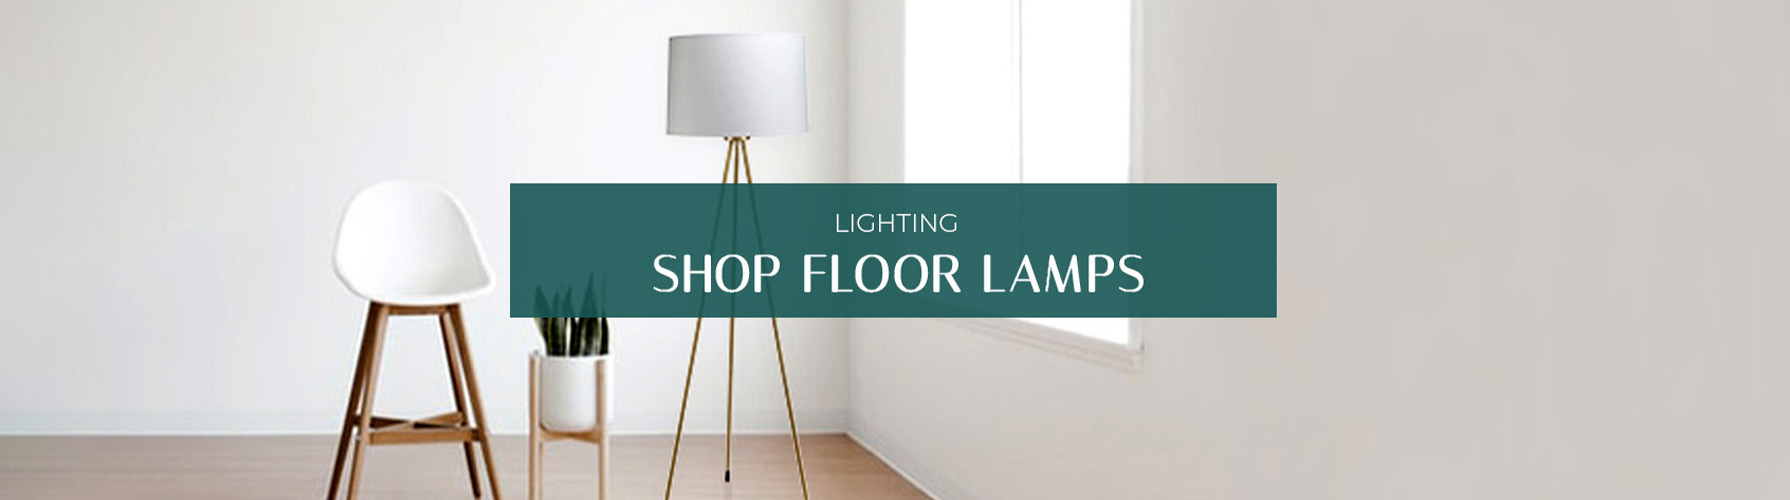 sbc-new-shop-floor-lamps.jpg